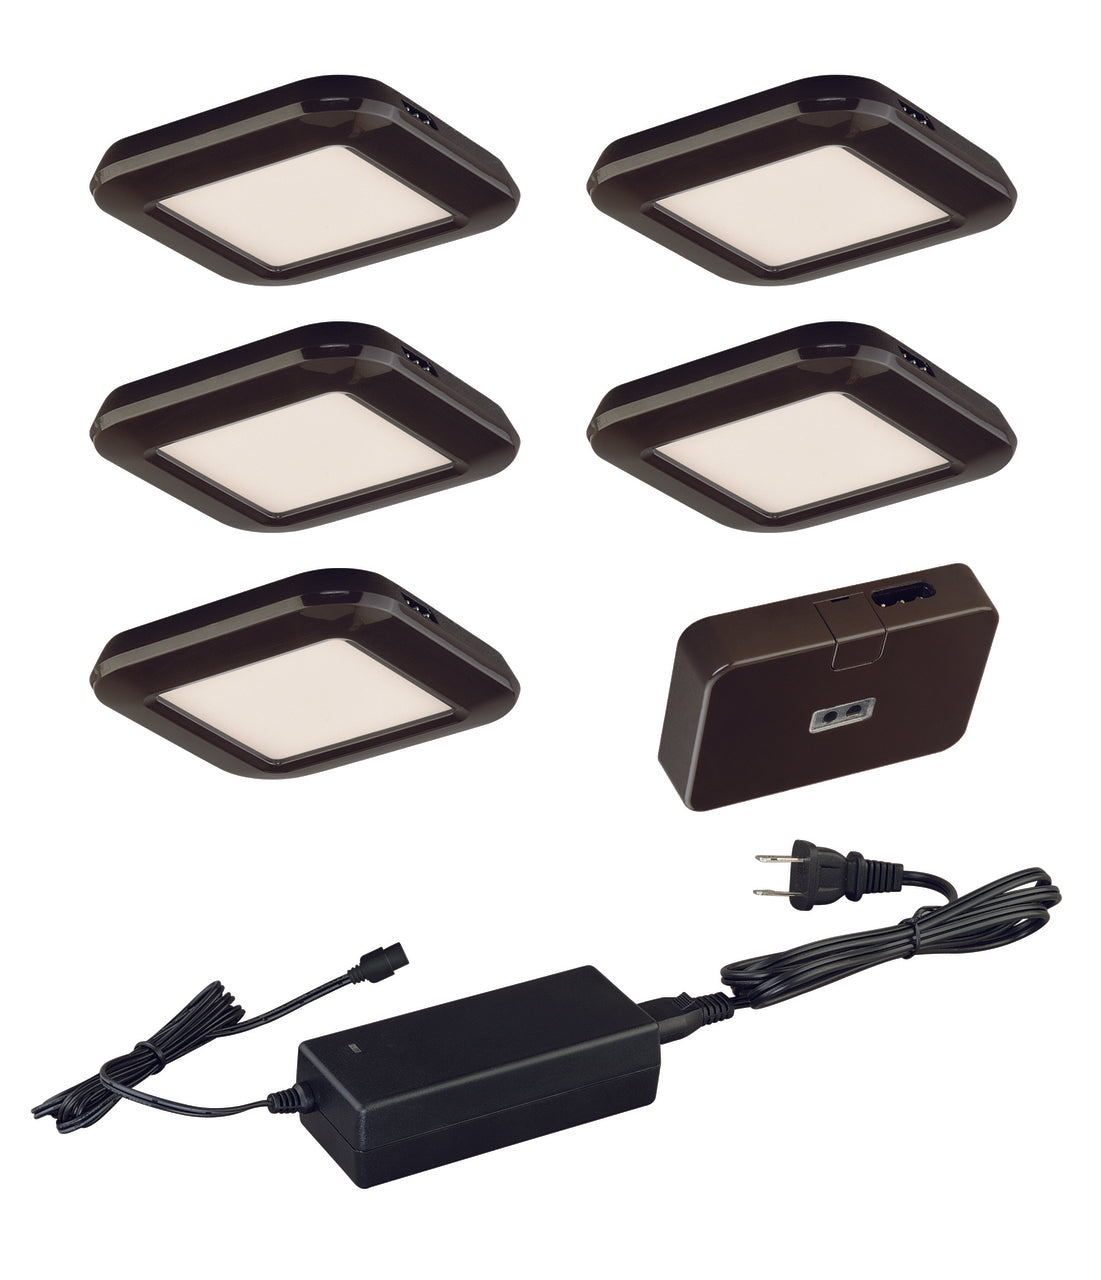 Vaxcel X0033 Smart Lighting Low Profile Under Cabinet Puck Light 5-pack Kit